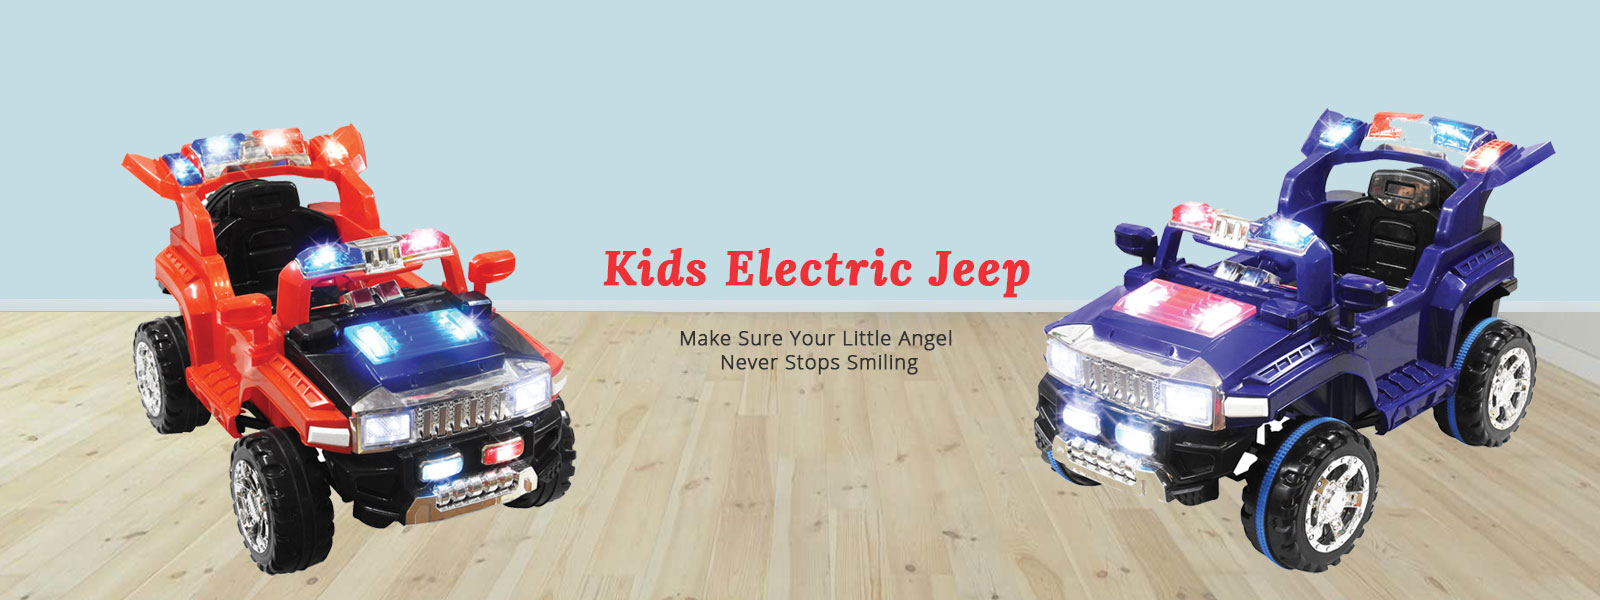 Kids Electric Jeep Manufacturers in Kollam